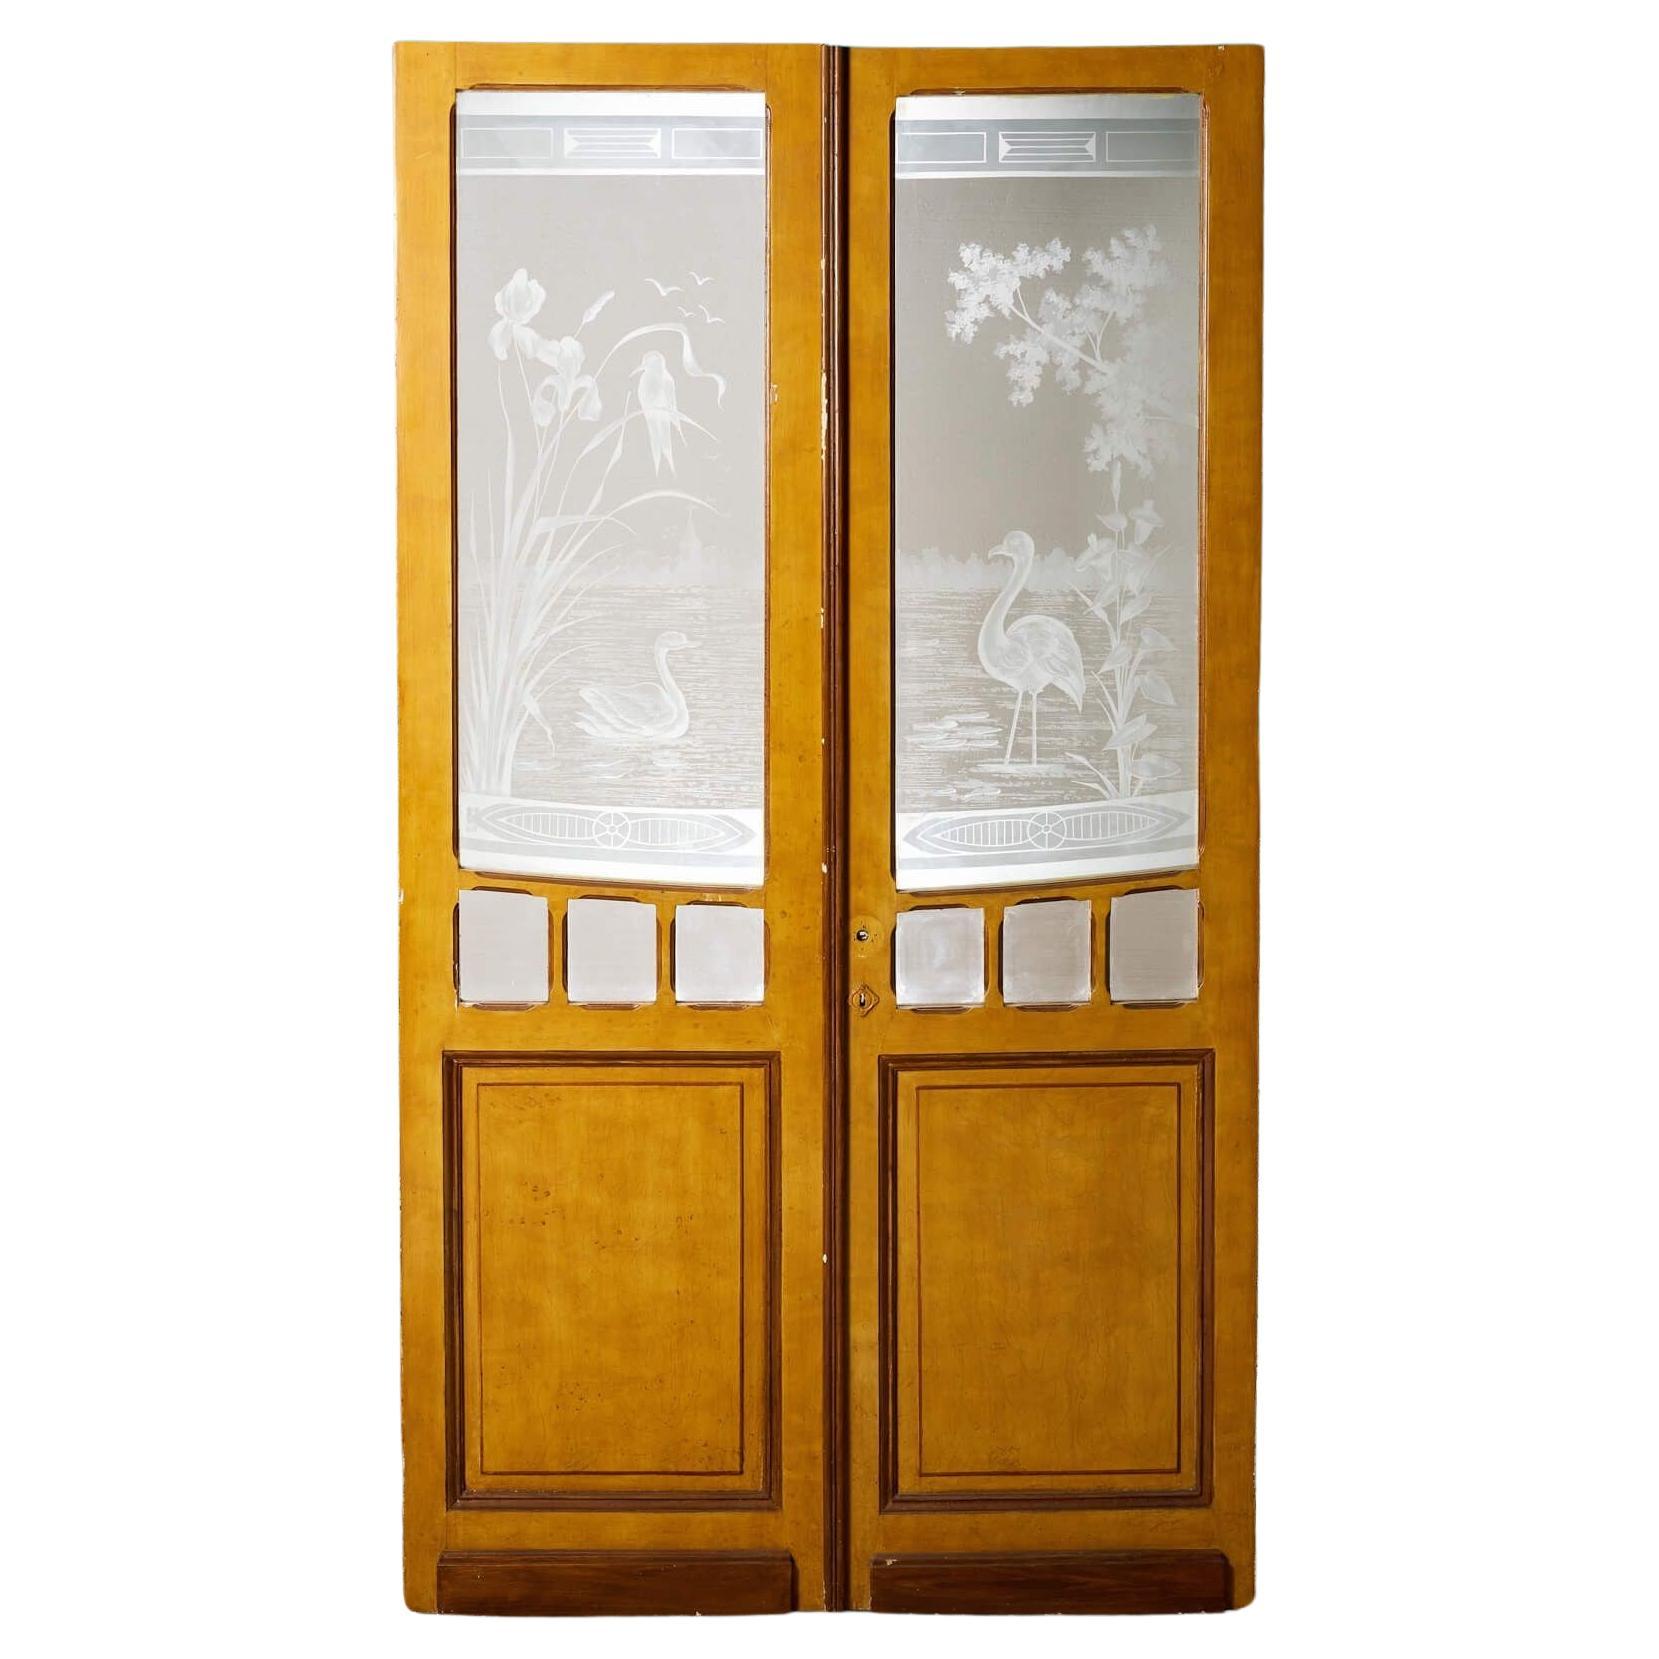 Set of Antique Acid Etched Glazed Double Doors